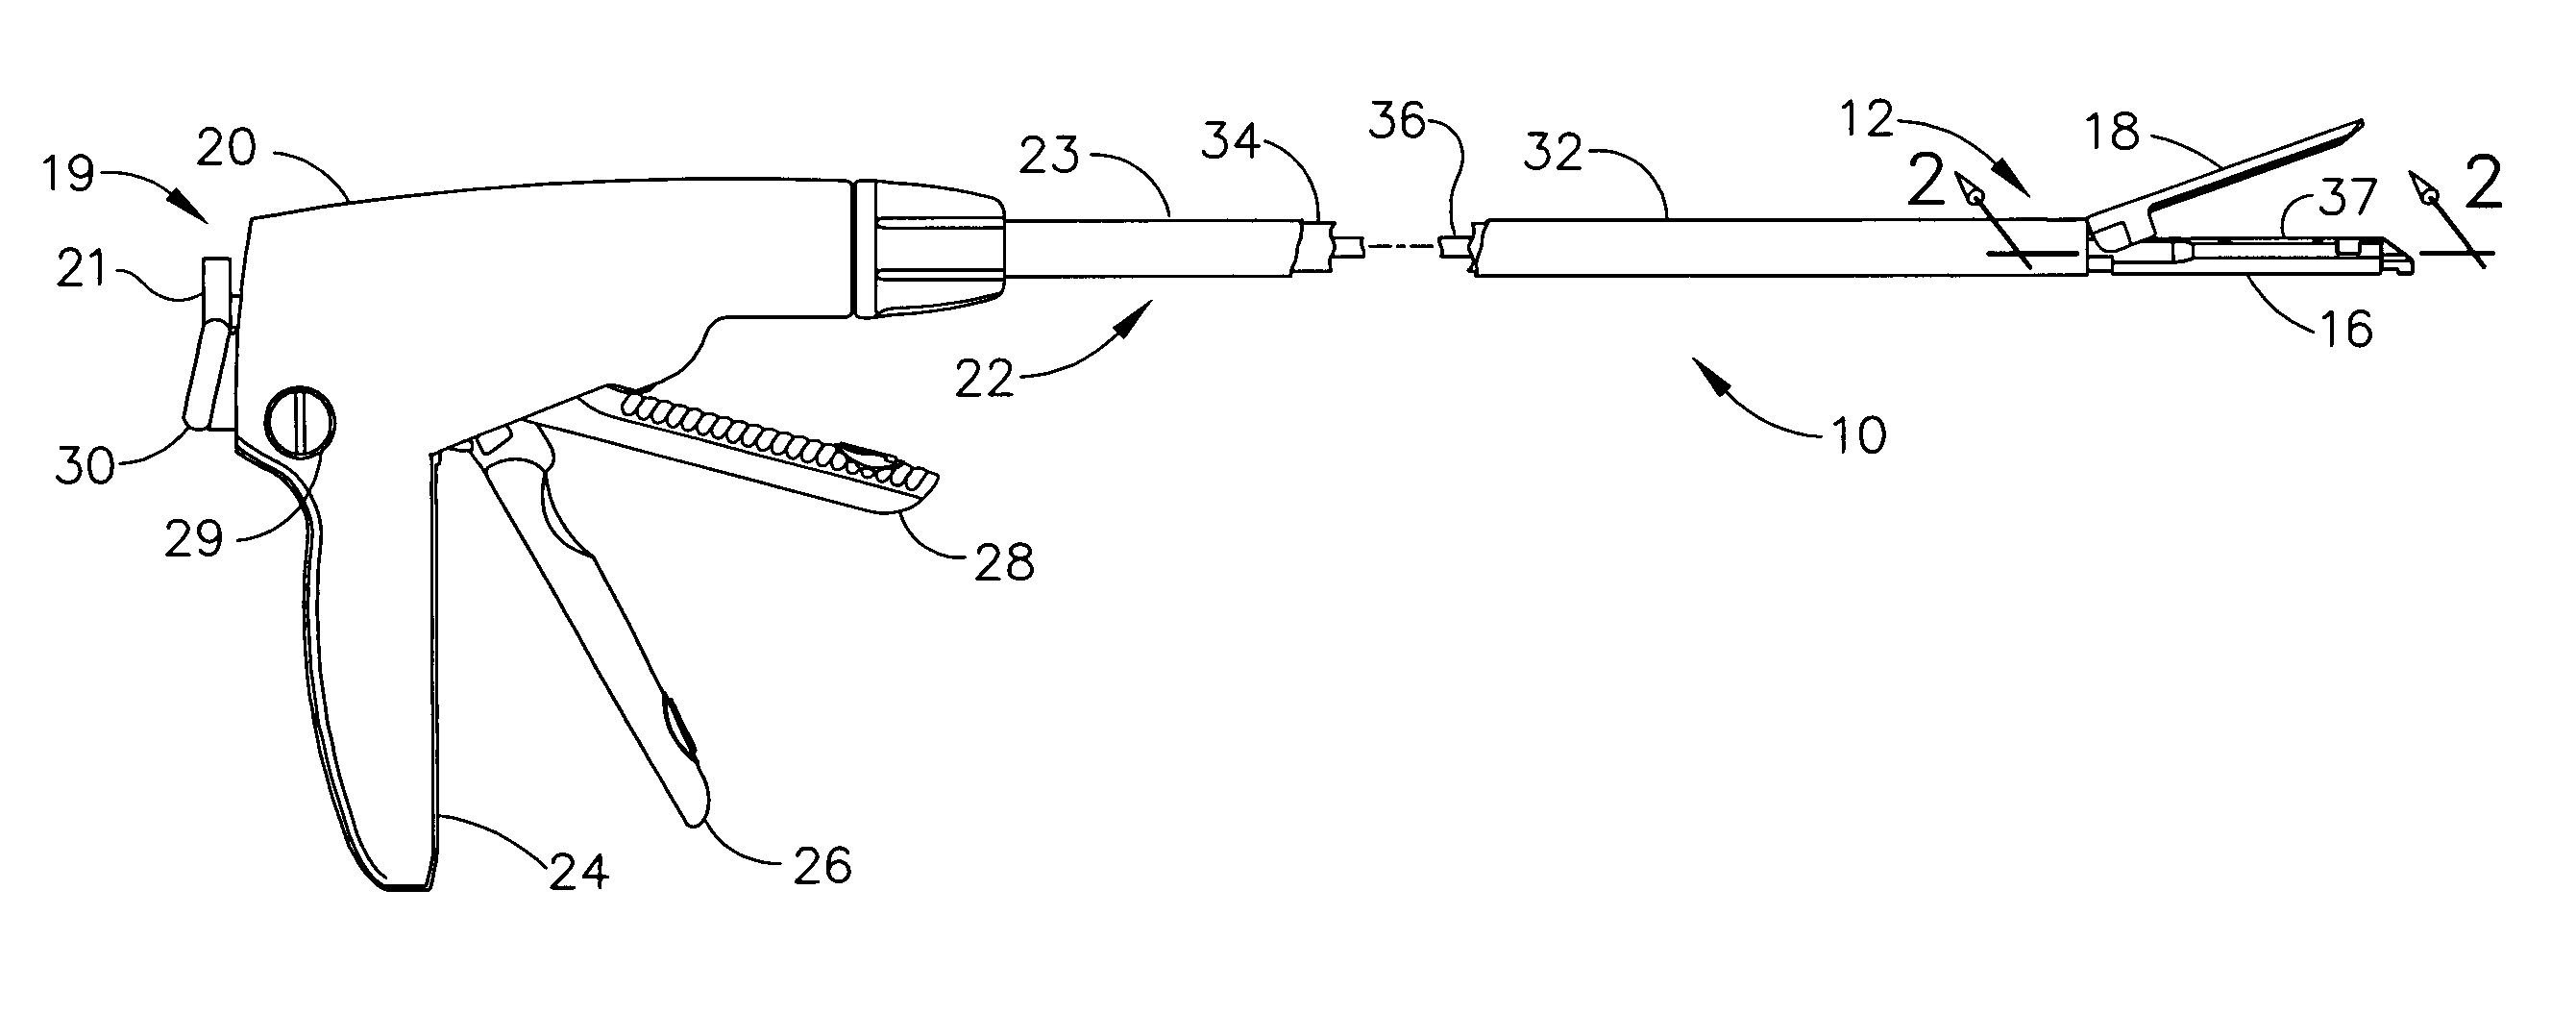 Surgical stapling instrument having preloaded firing assistance mechanism